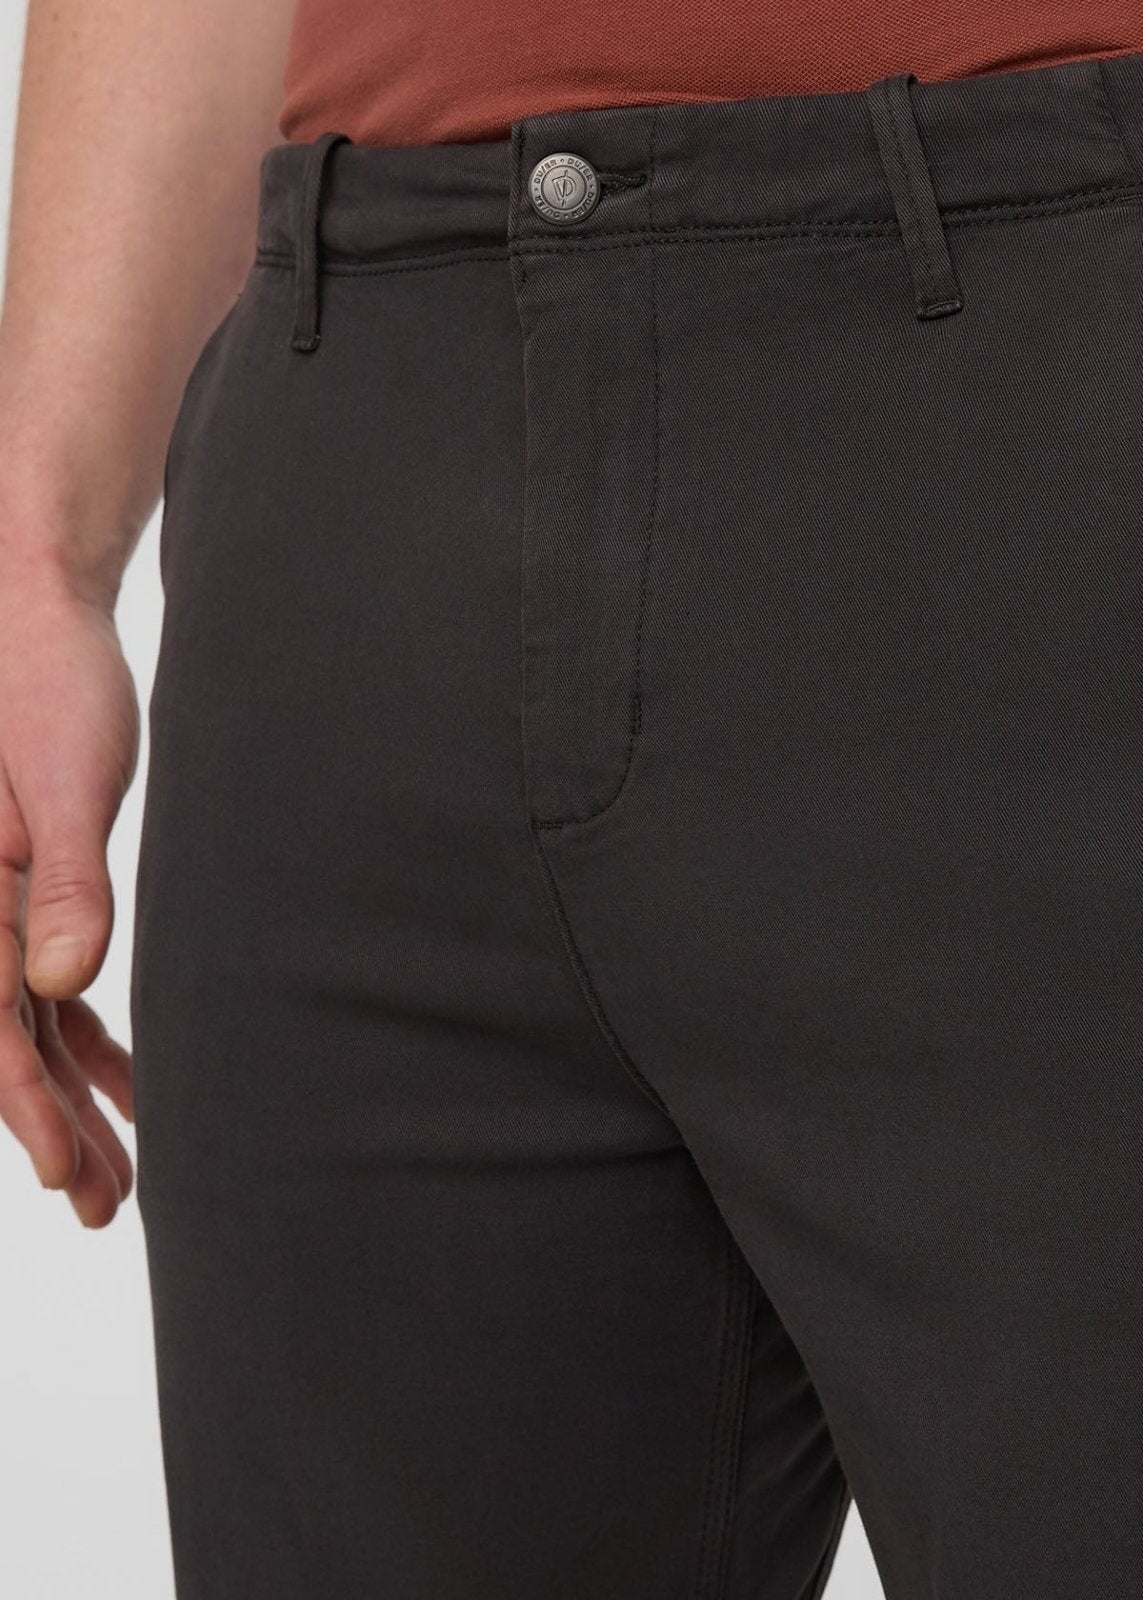 mens stretch dark grey chino pants front waistband detail